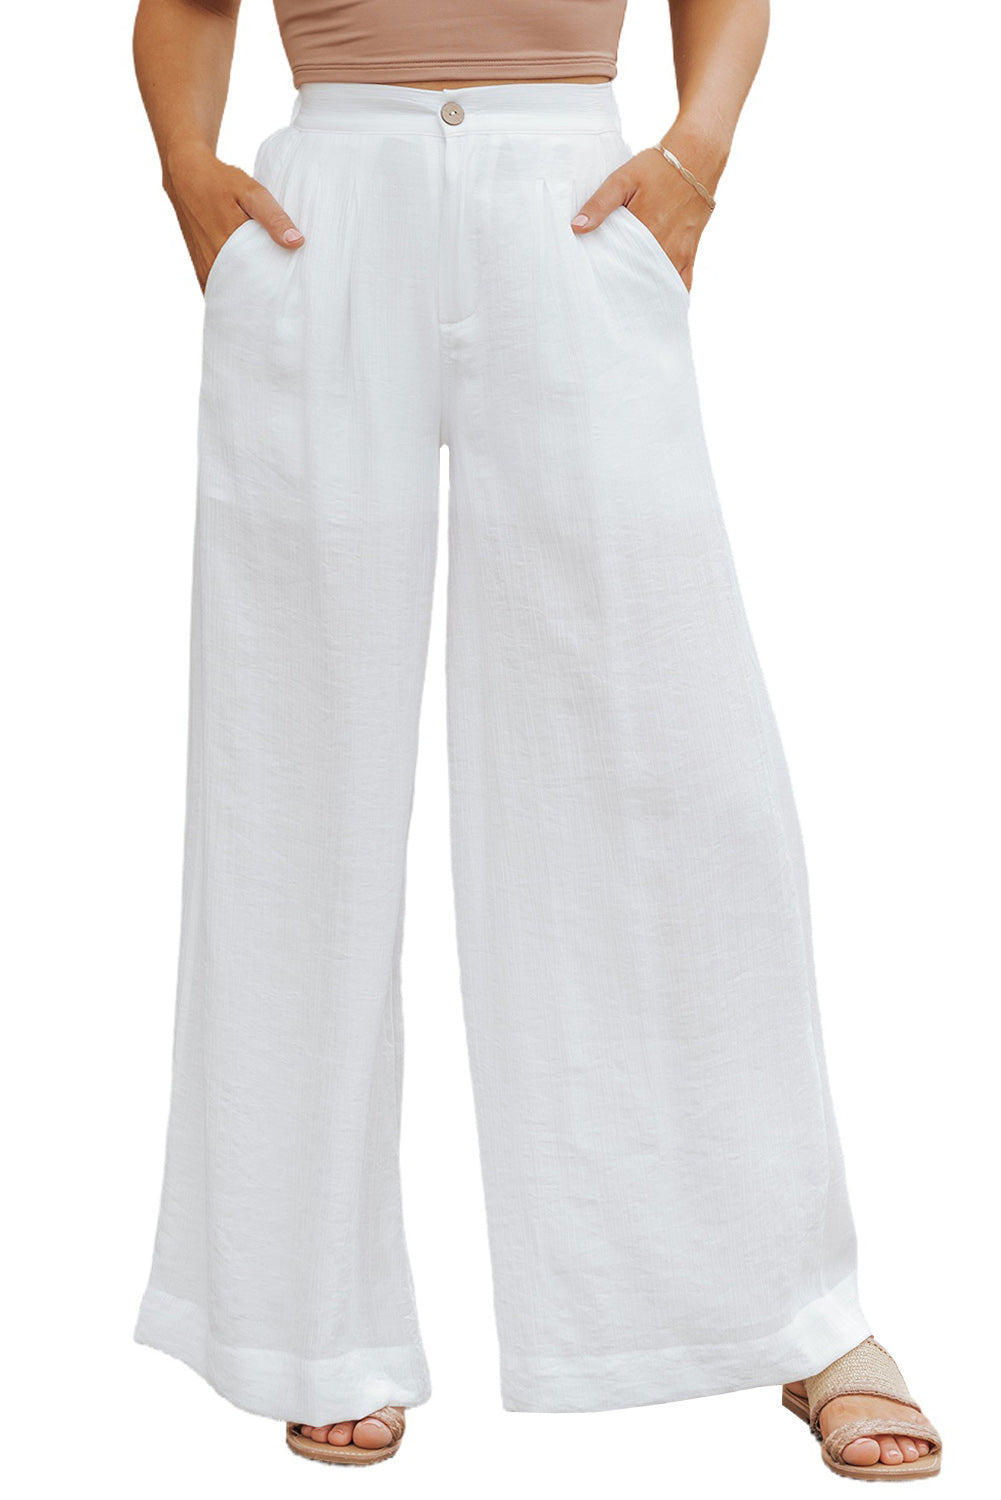 White Solid Color Elastic Waist Pleated Wide Leg Womens Pants - US2EInc Apparel Plug Ltd. Co